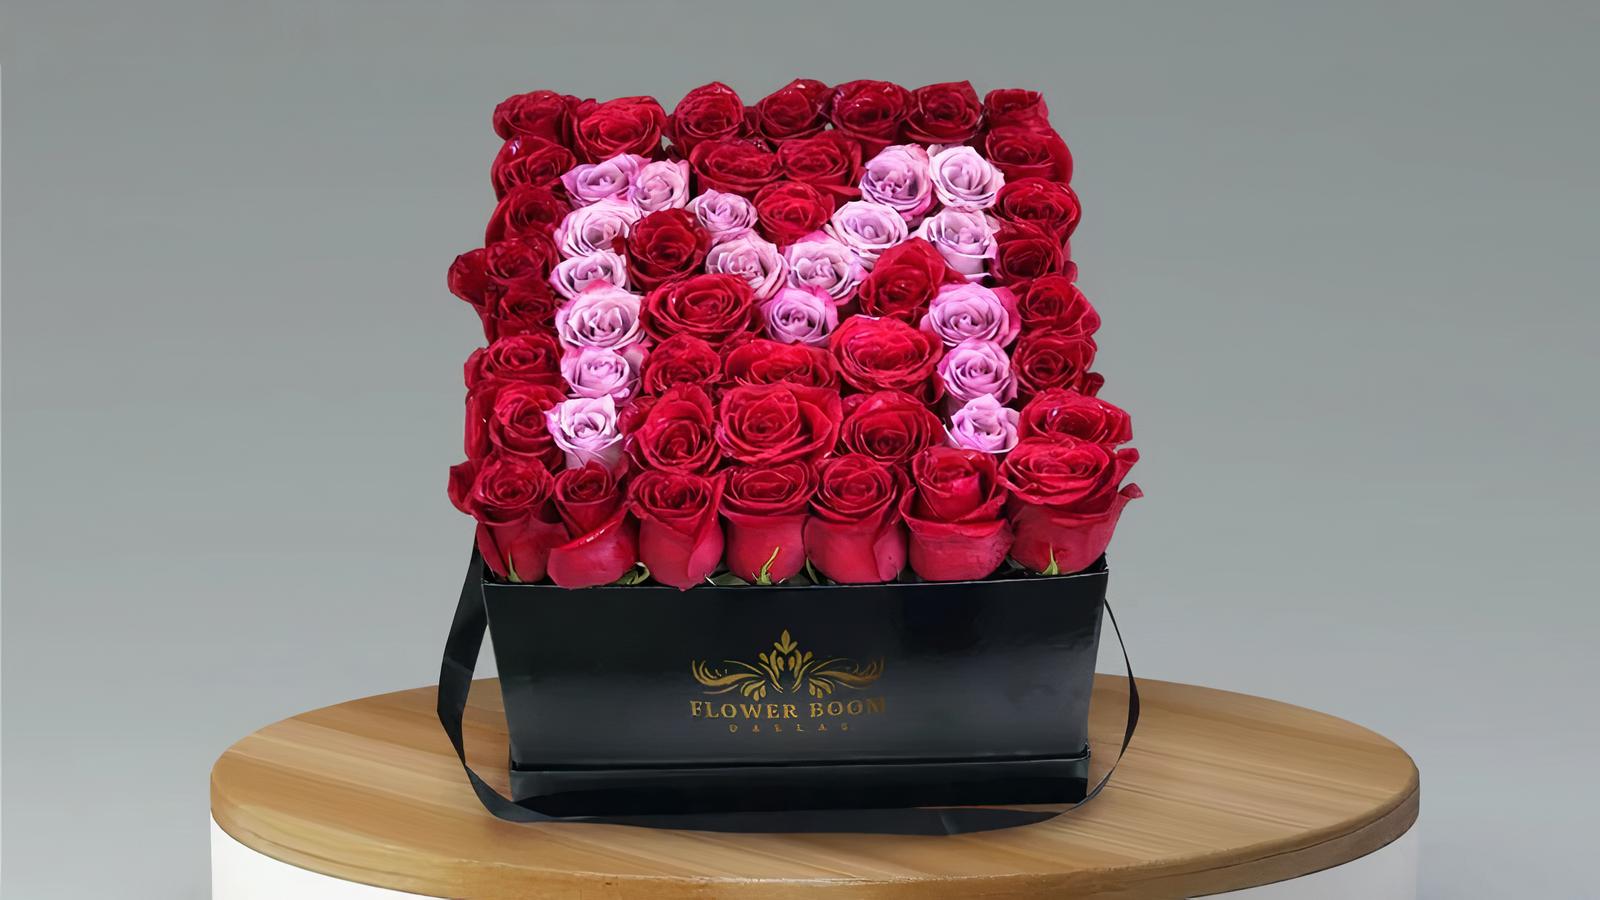 Korean Style Rose Bouquet (Large)